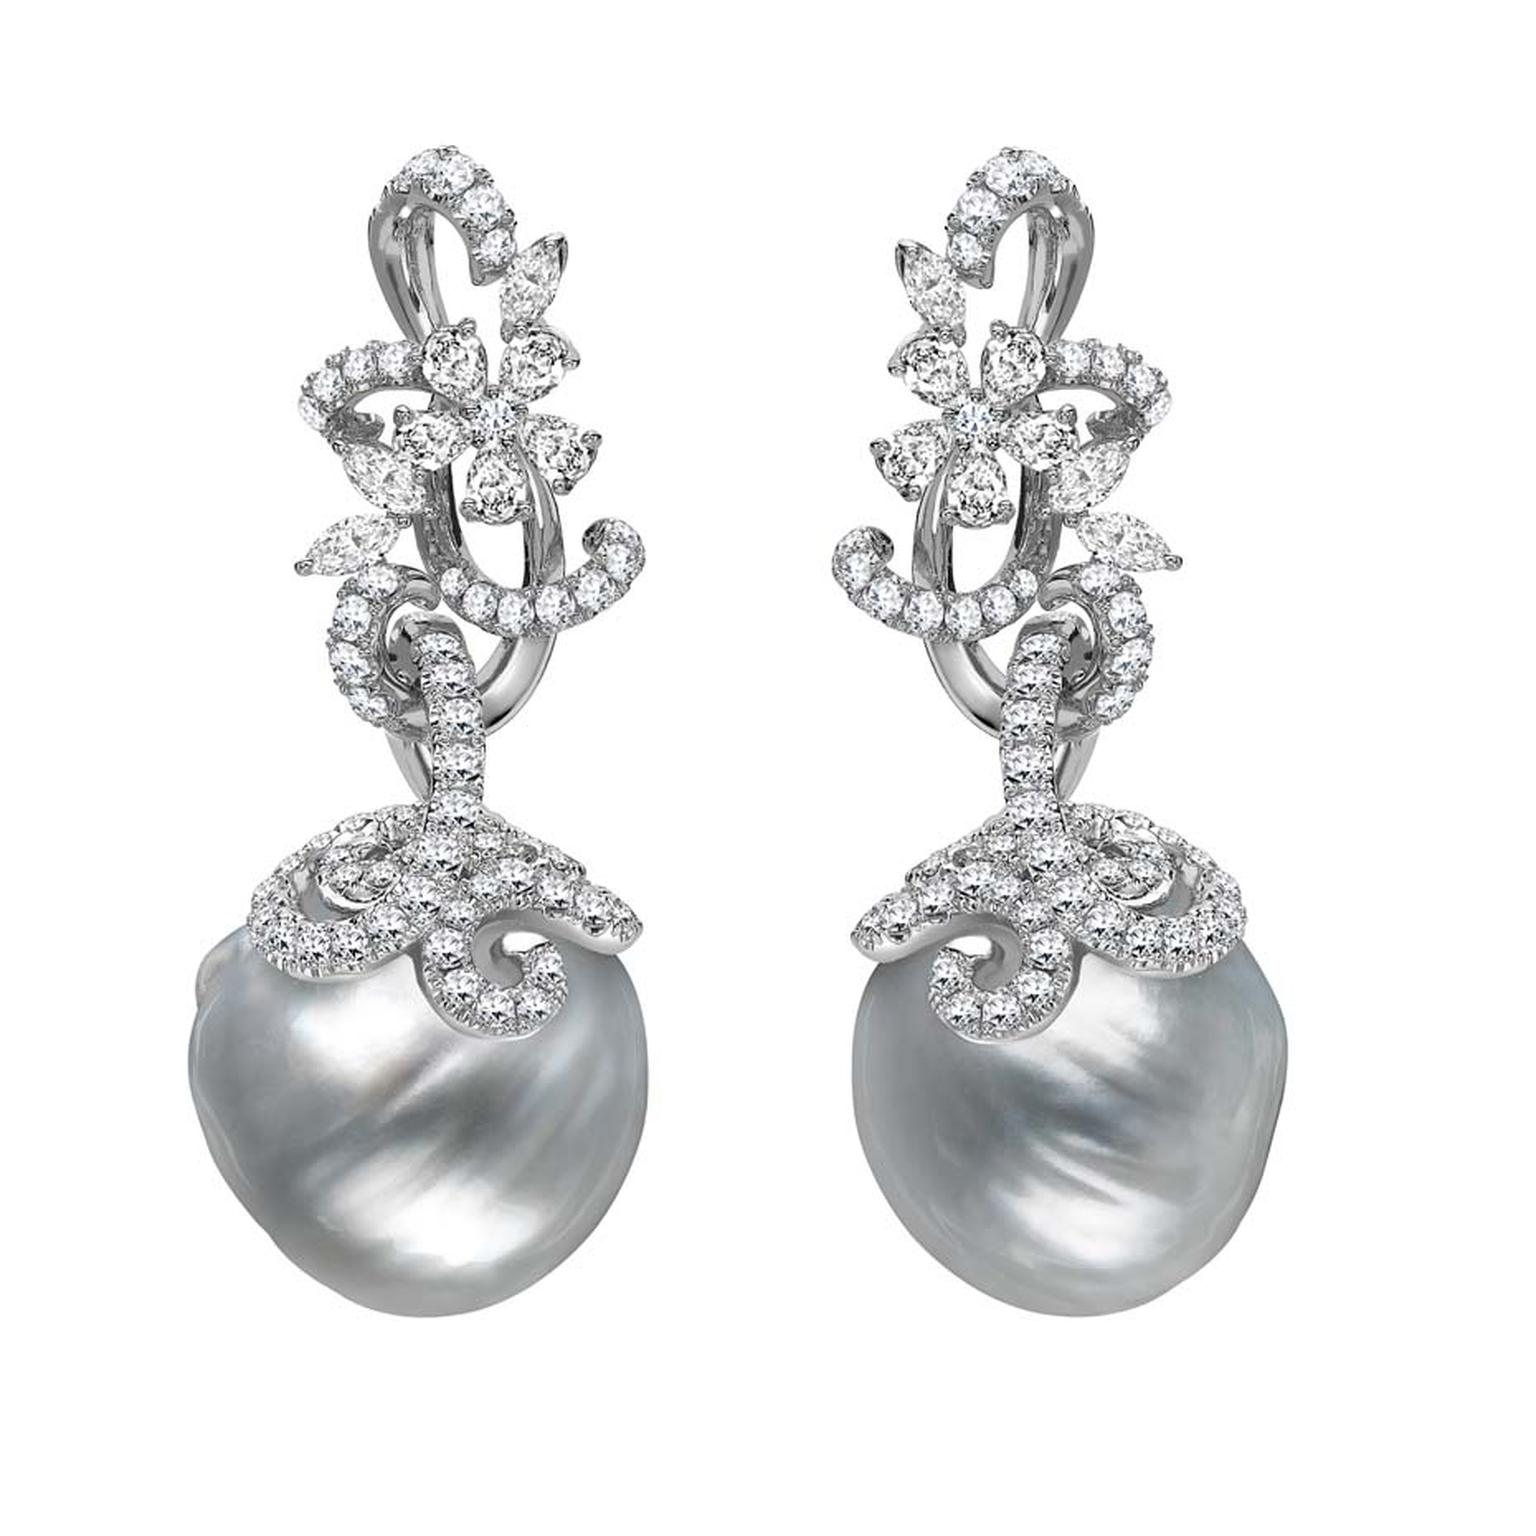 Mikimoto Regalia Collection Arabesque earrings featuring